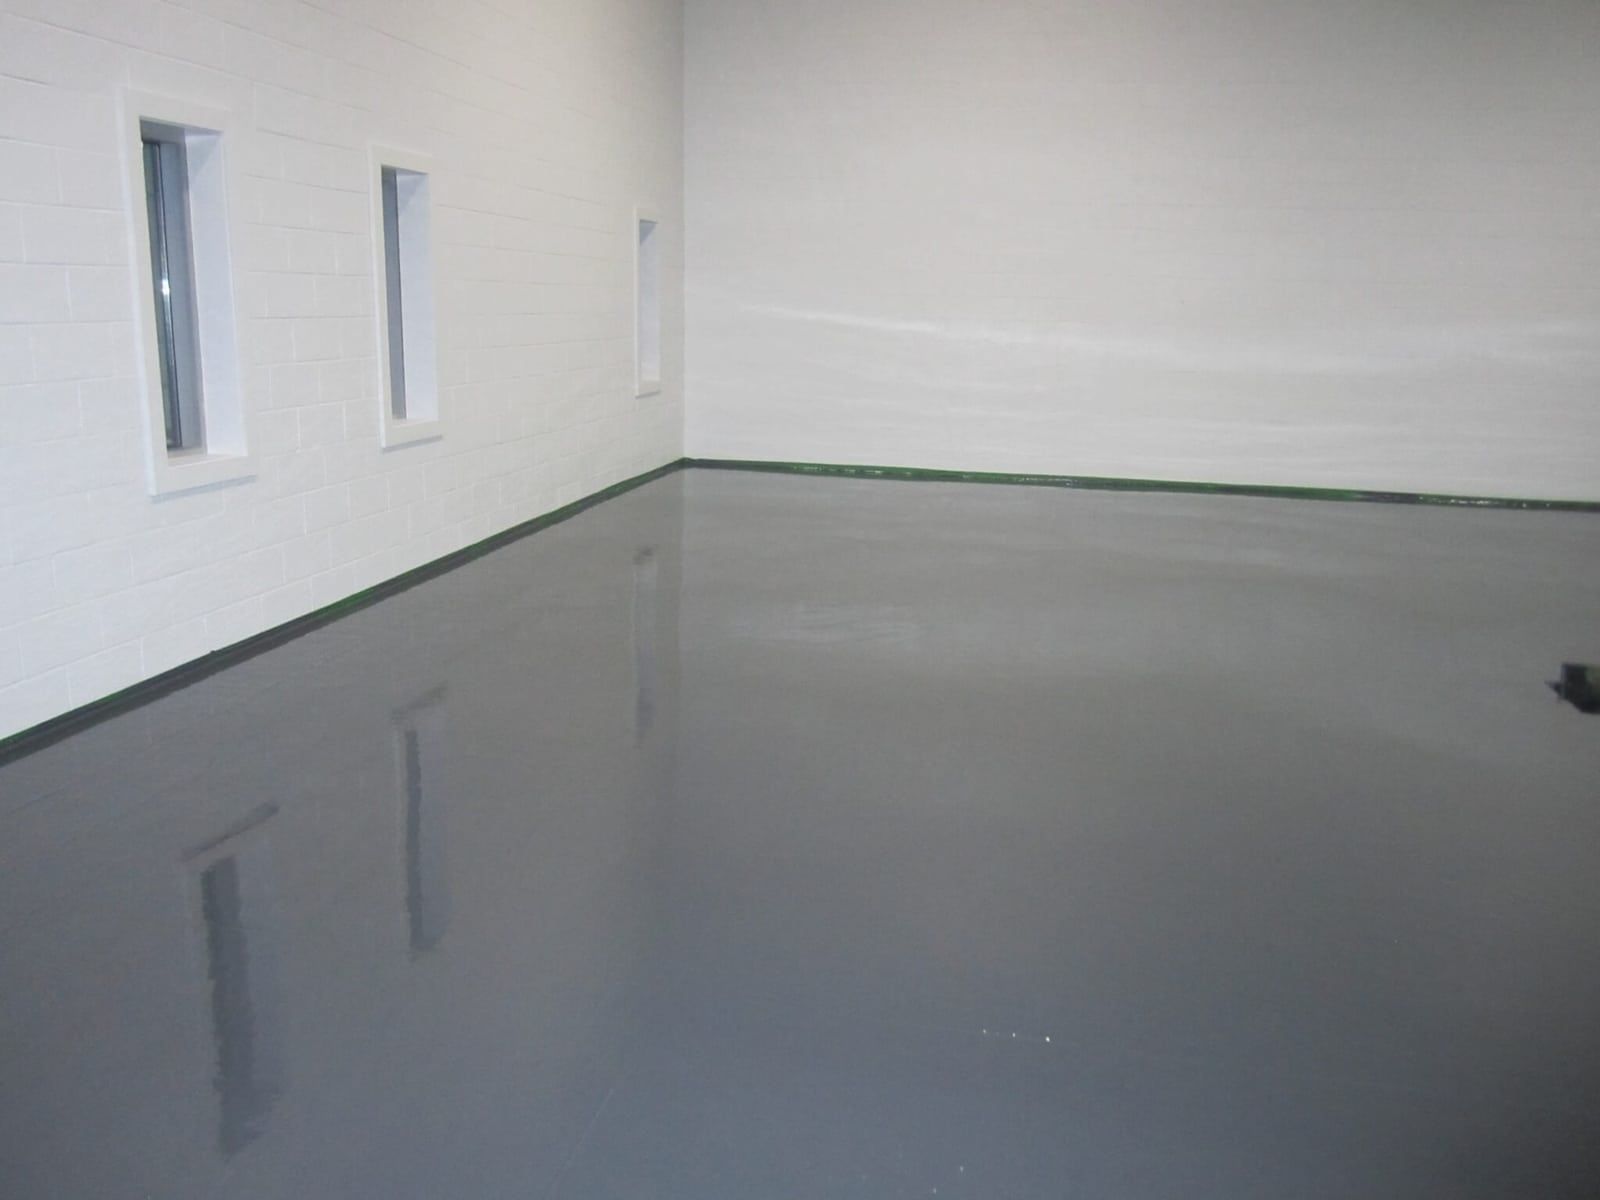 Residential epoxy garage floor